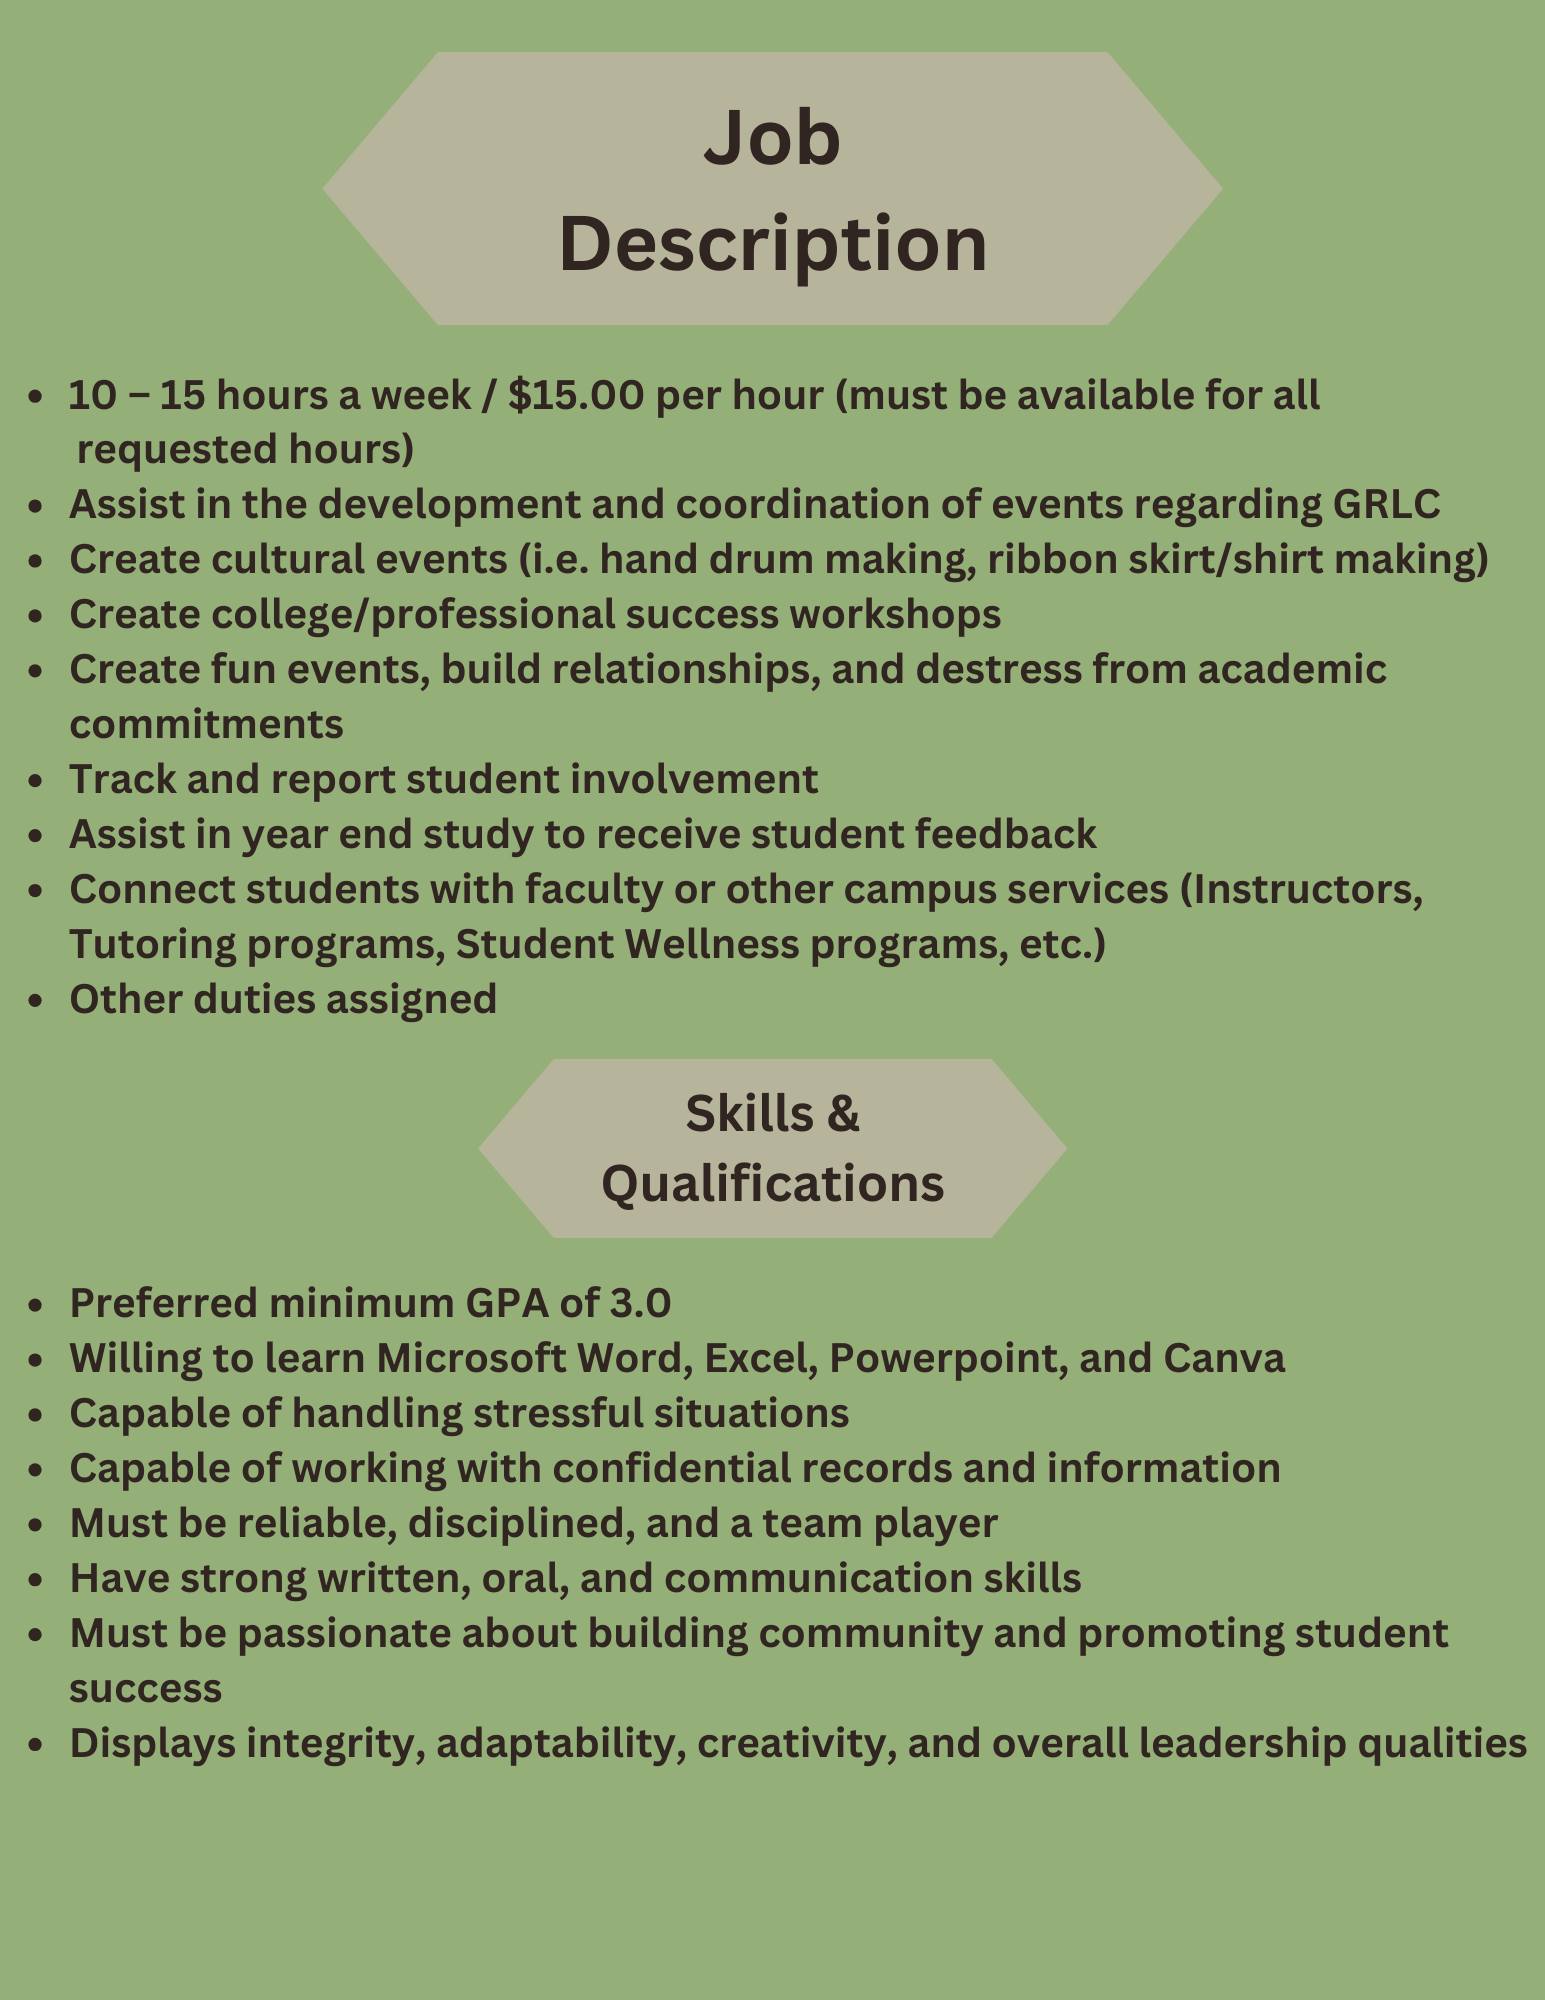 GRLC Job Qualifications